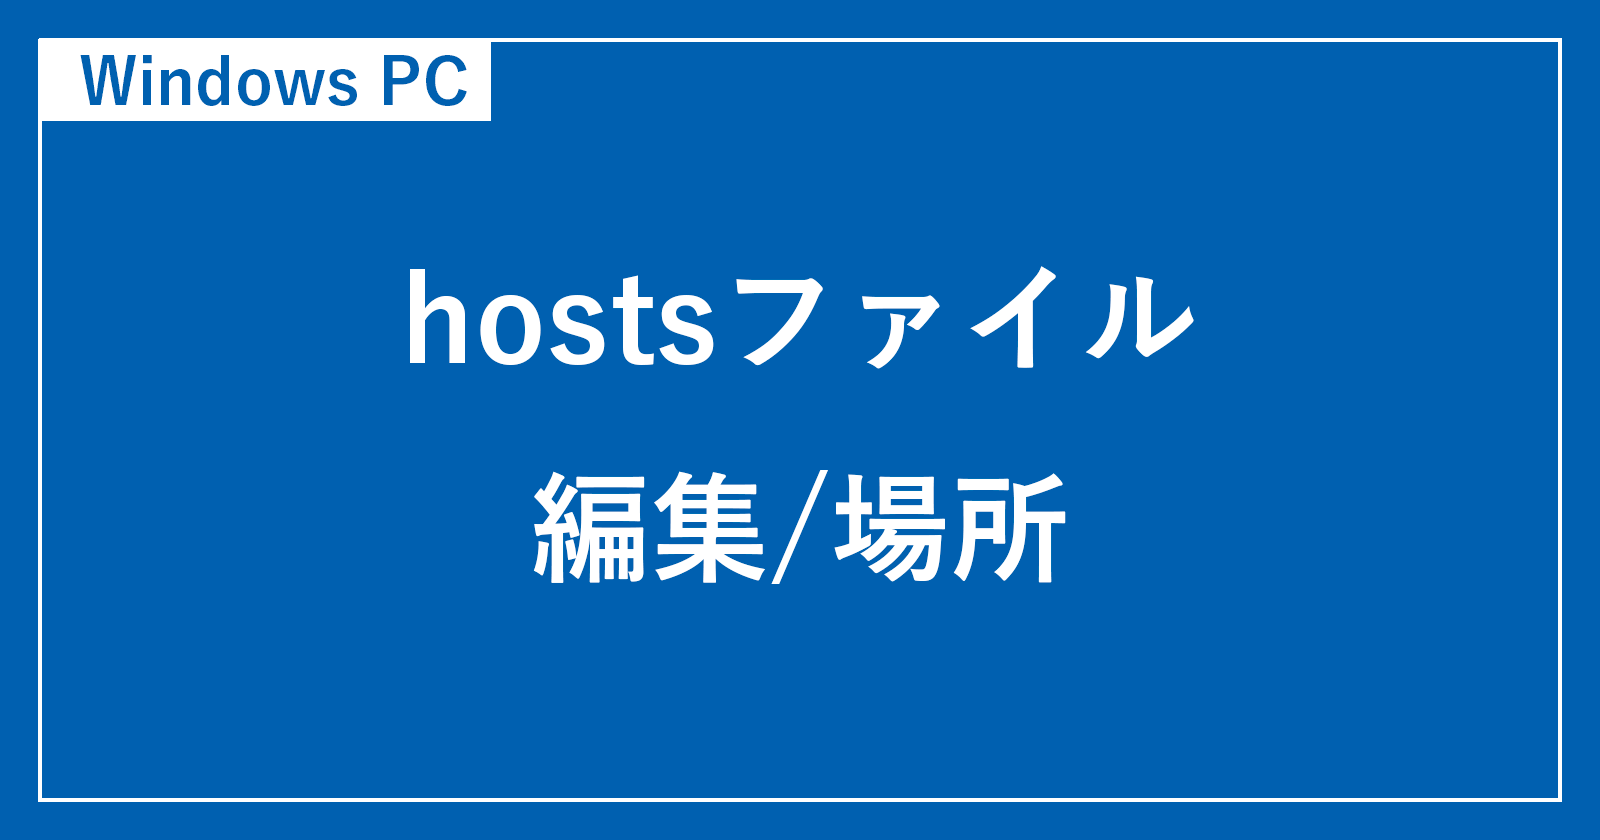 windows pc hosts file